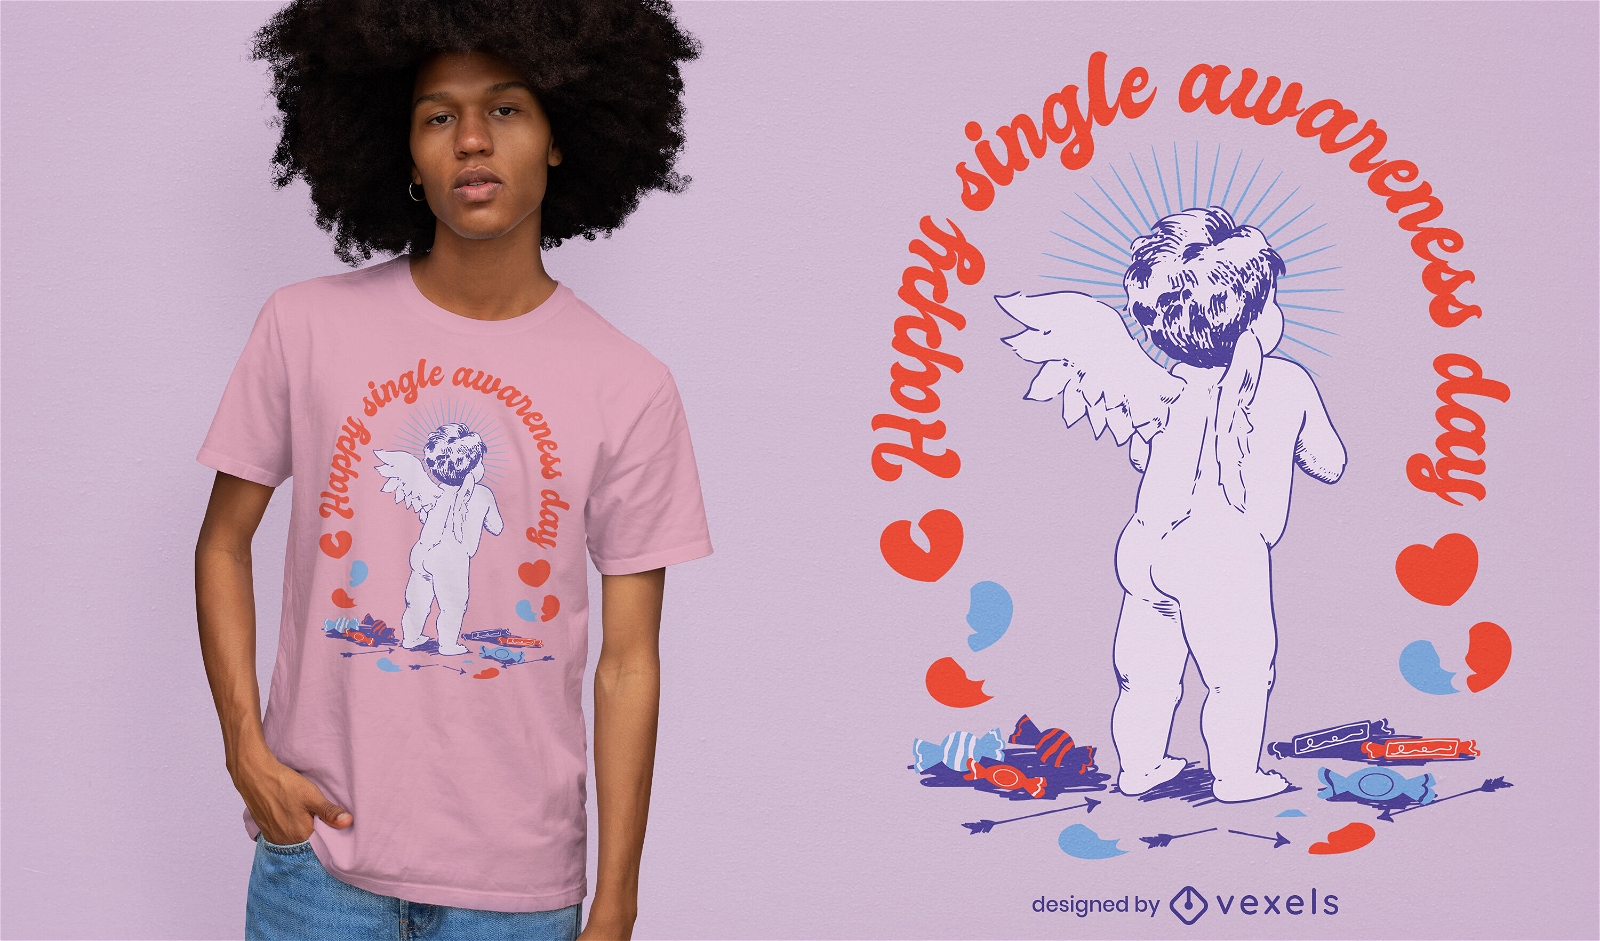 Cooles, gl?ckliches T-Shirt-Design f?r den Single Awareness Day